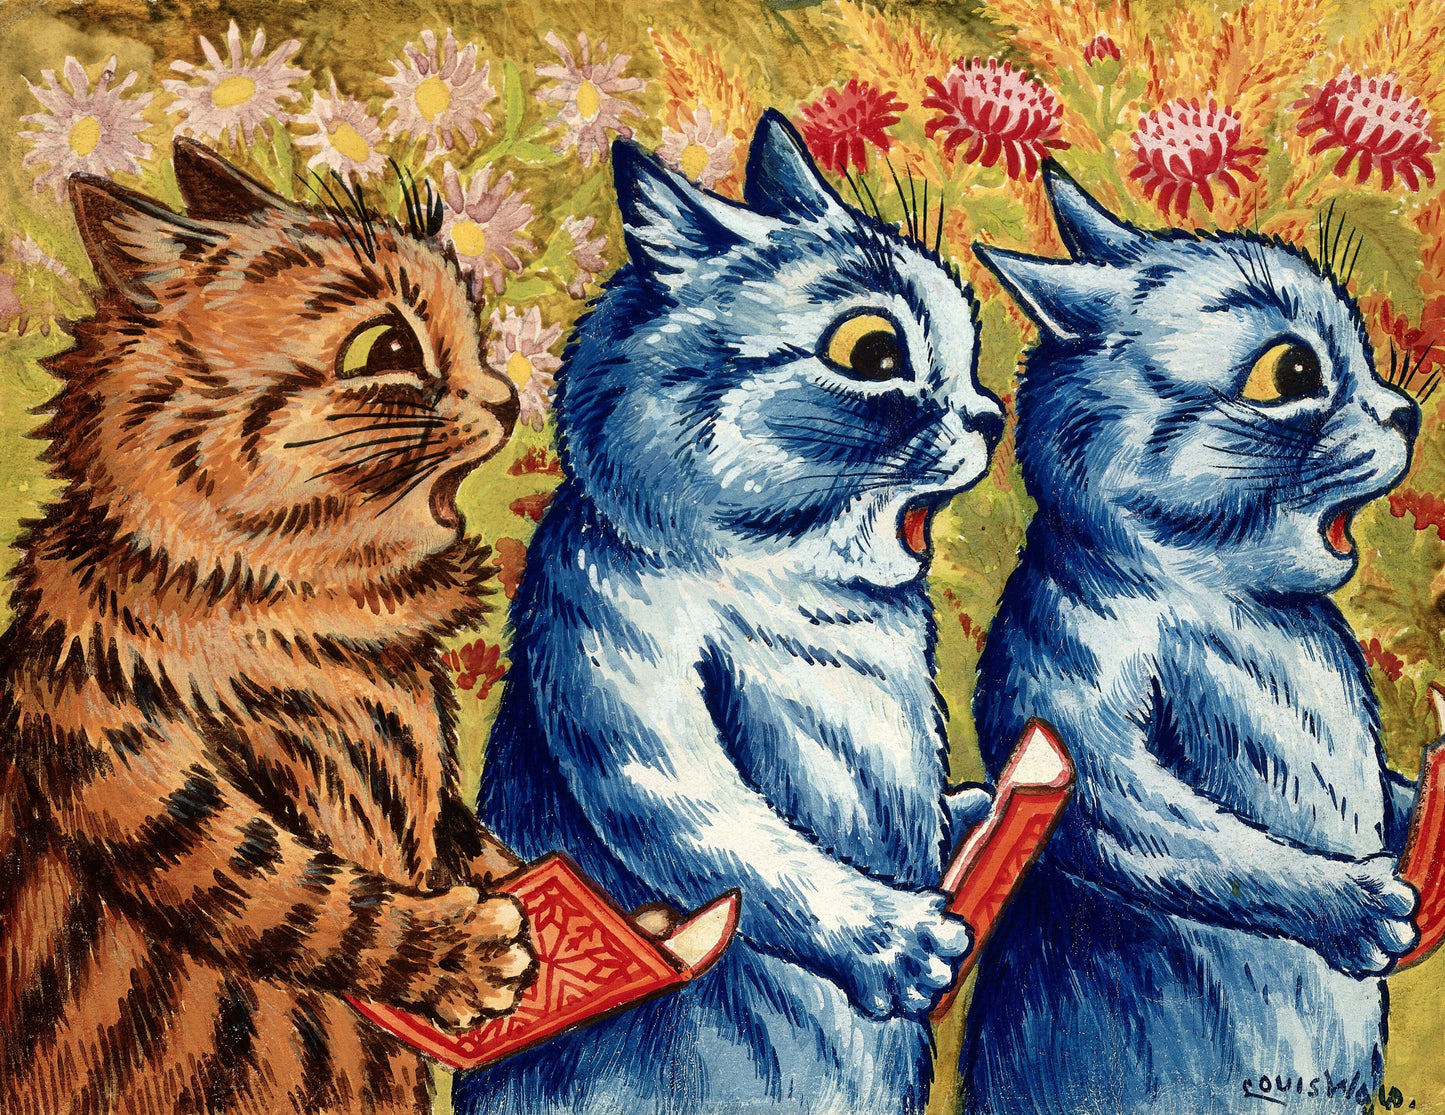 Three cats singing (1930s) | Louis Wain cat prints Posters, Prints, & Visual Artwork The Trumpet Shop   